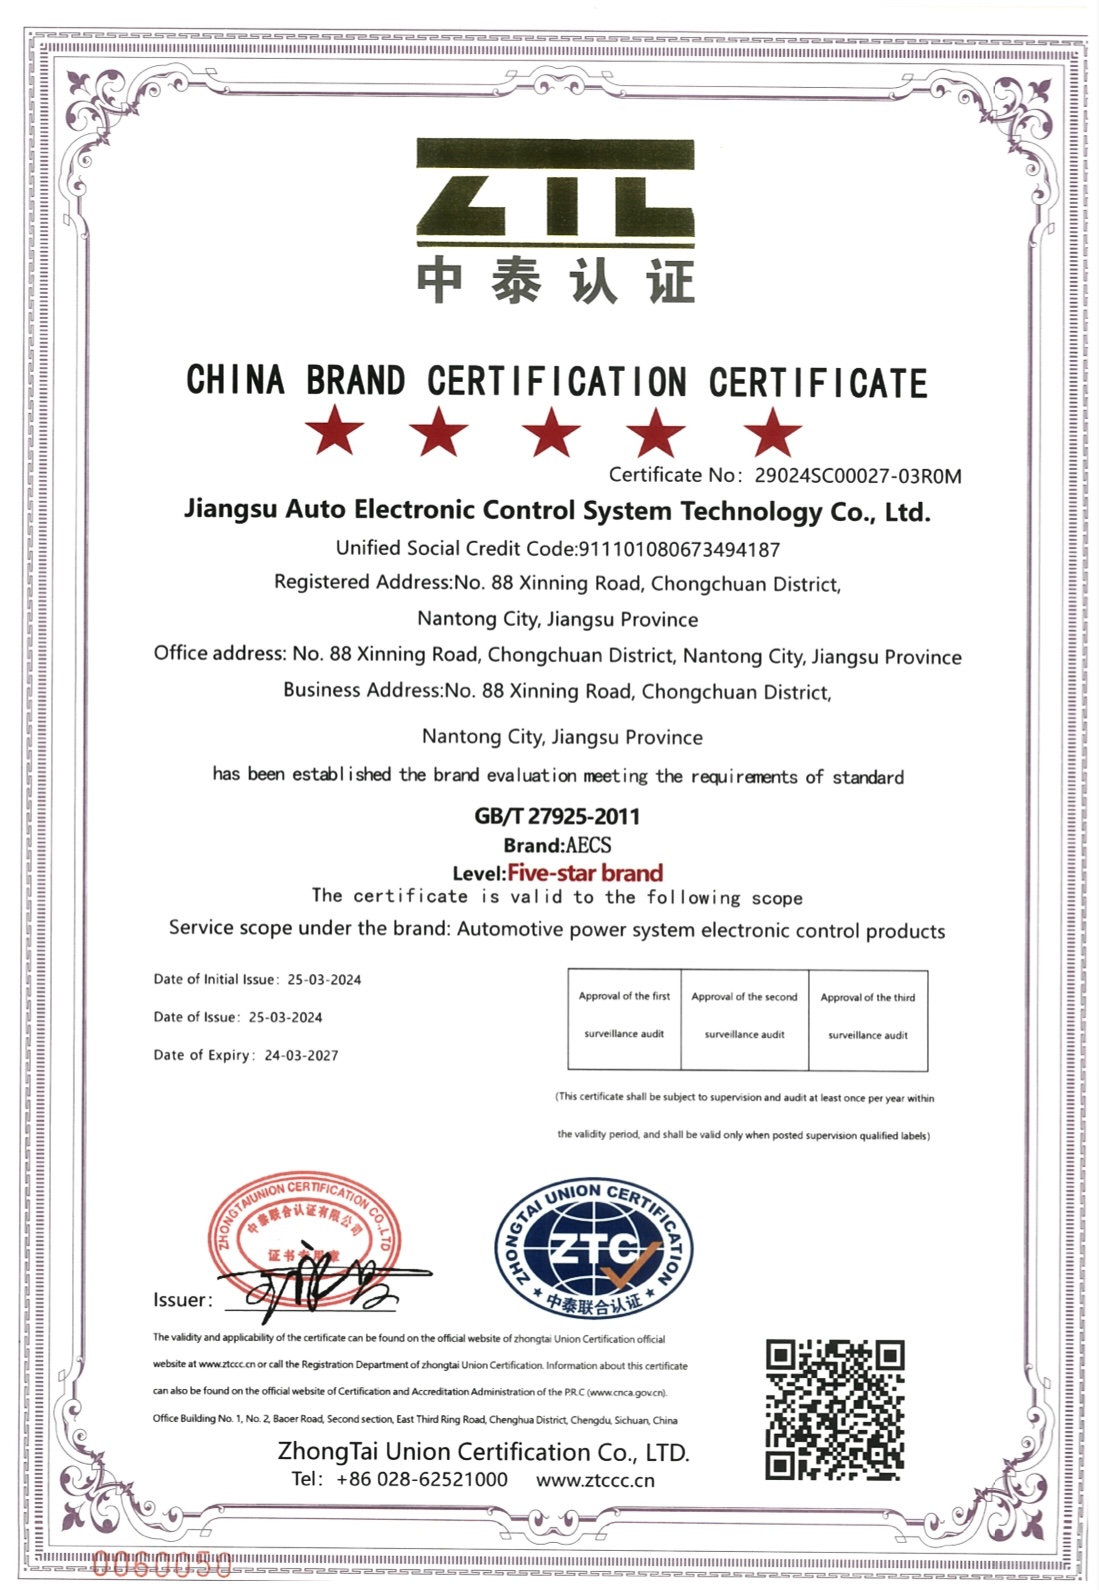 Jiangsu AECS-Five-star brand certification